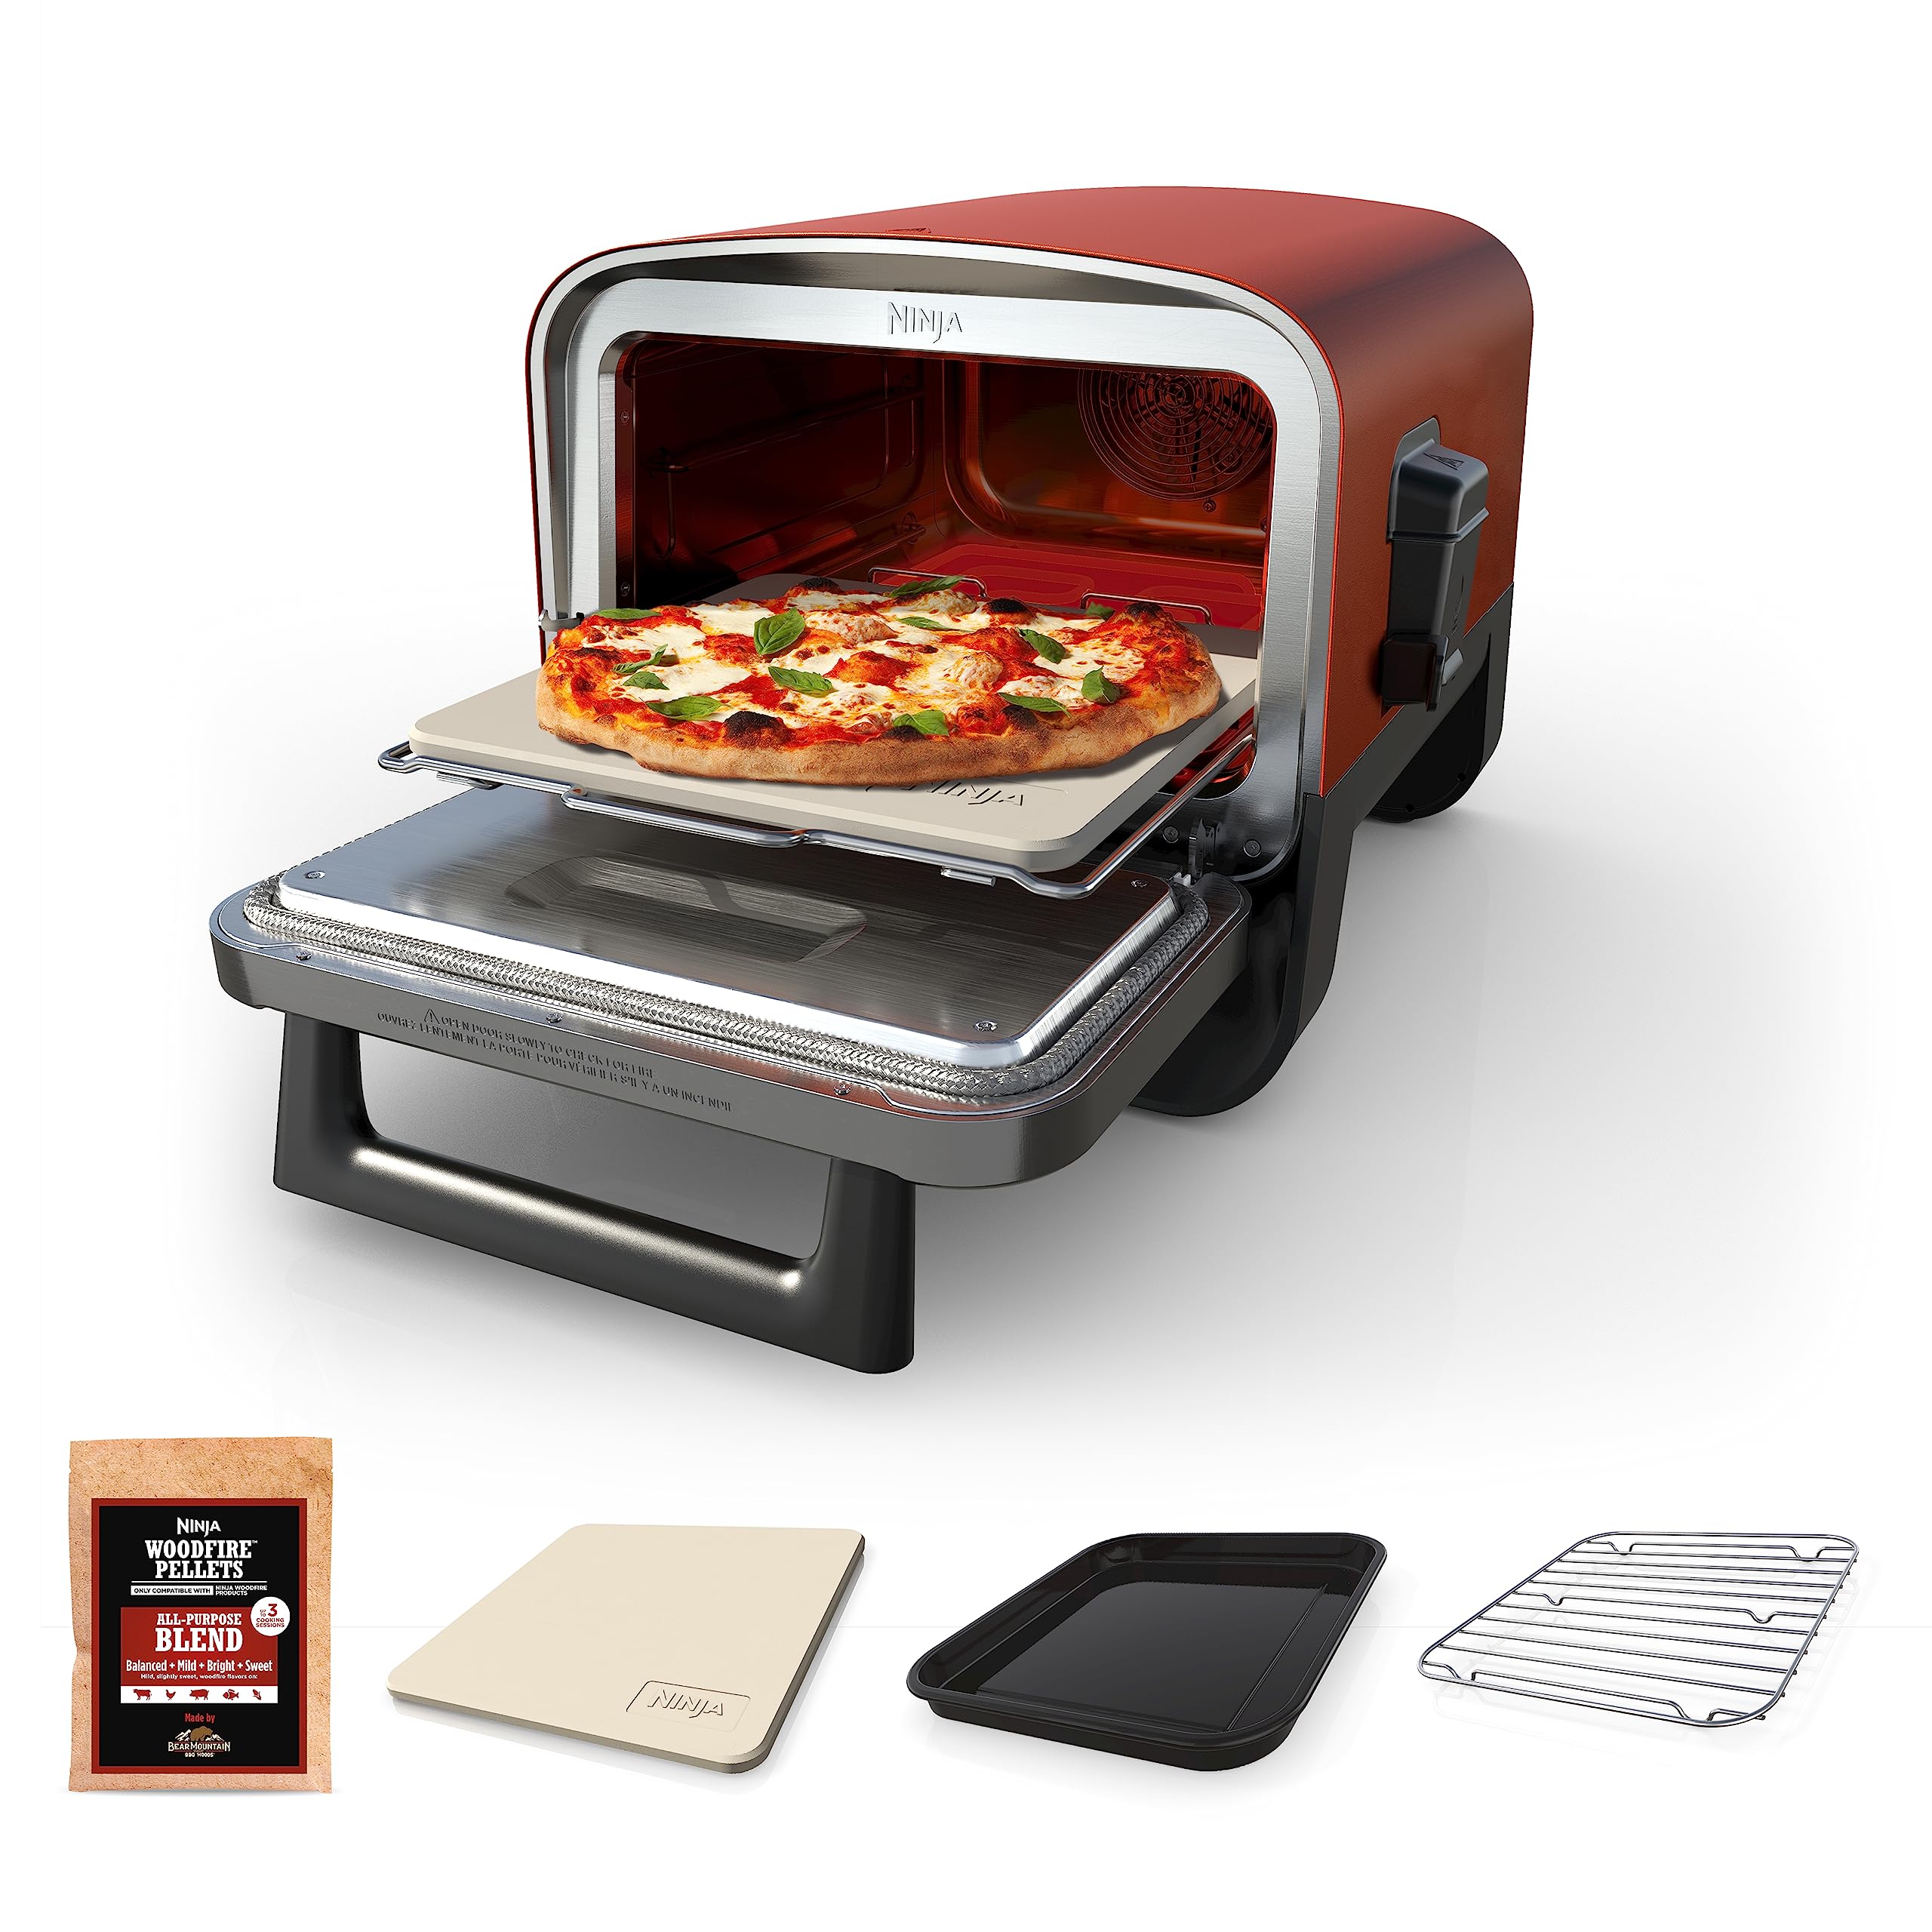 Ninja Woodfire Pizza Oven